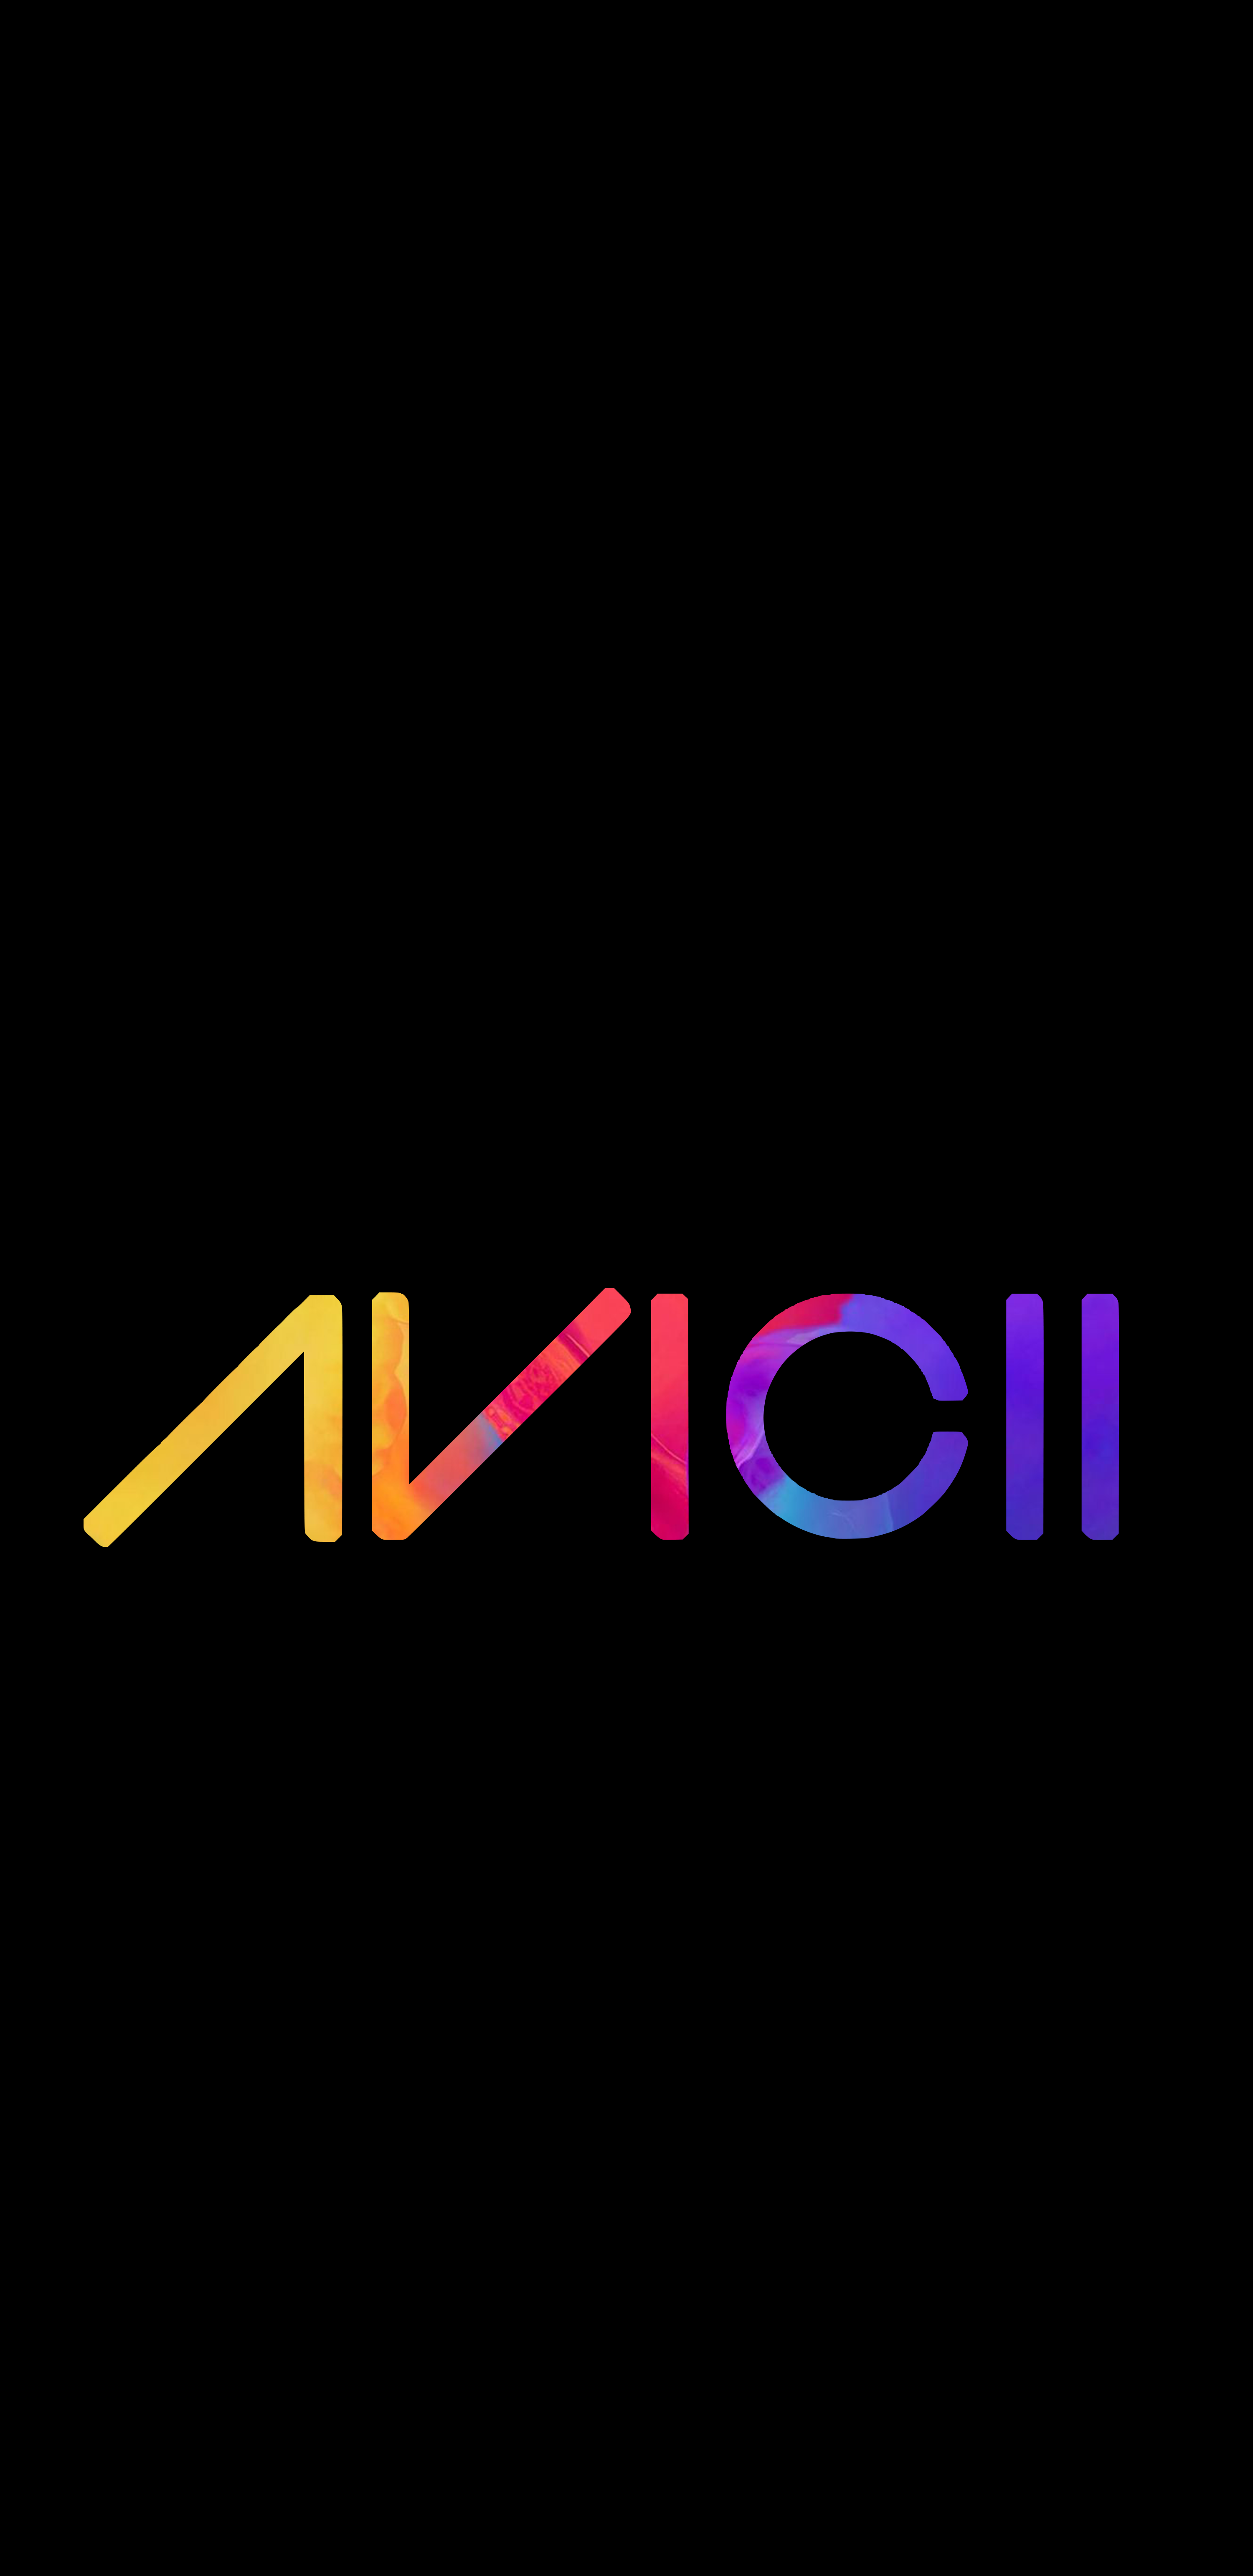 Avicii Hd Logo Smartphones Wallpapers Wallpaper Cave